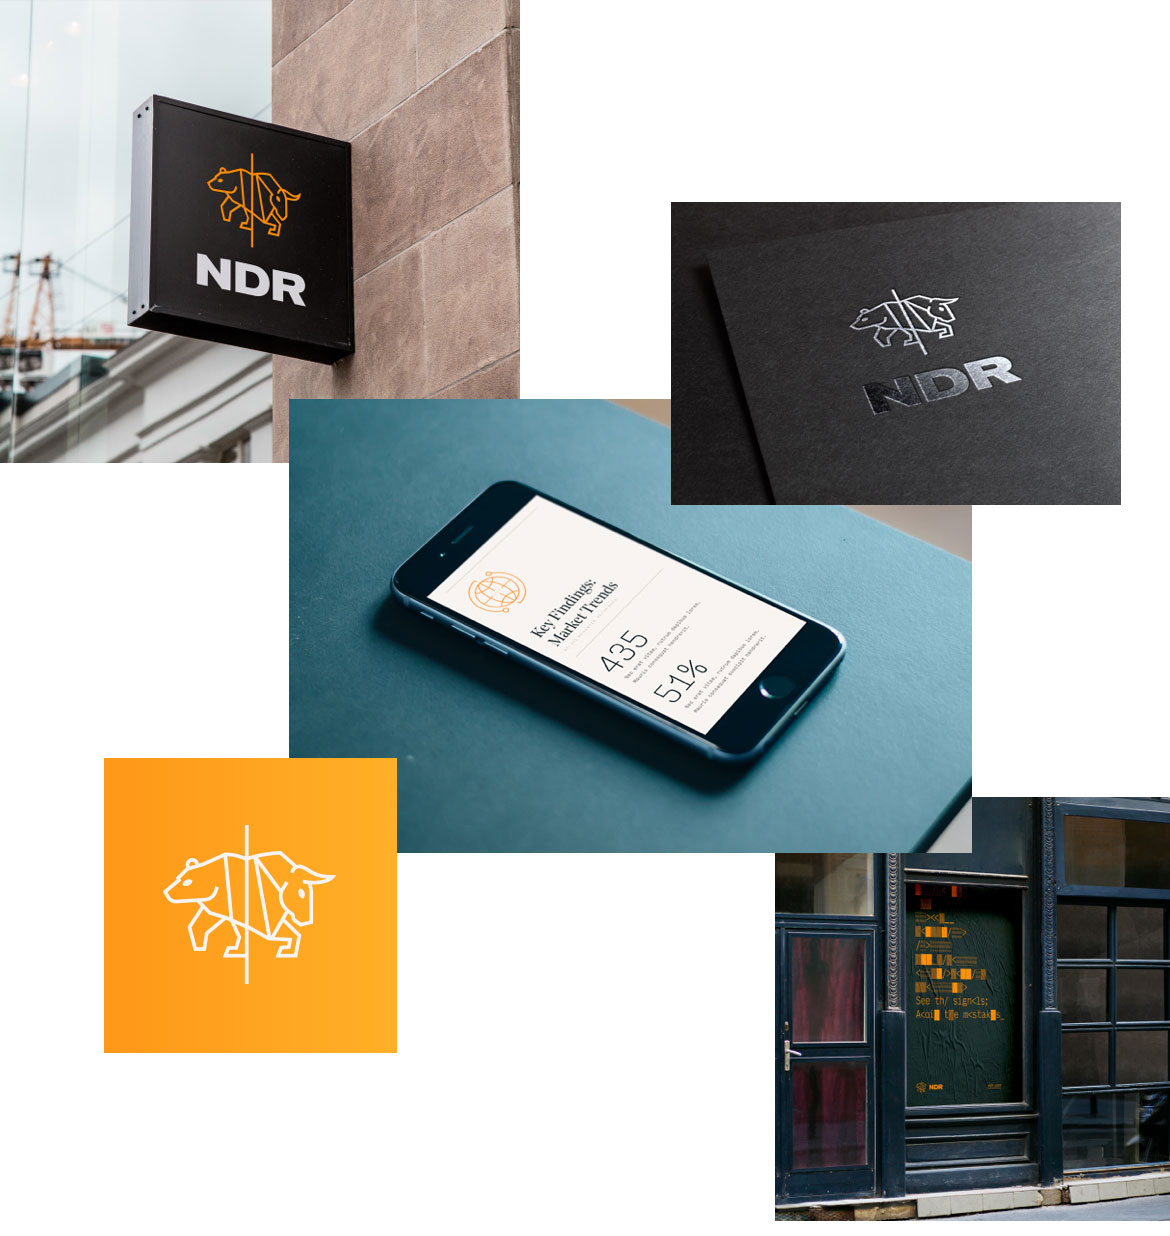 NDR logo usage examples